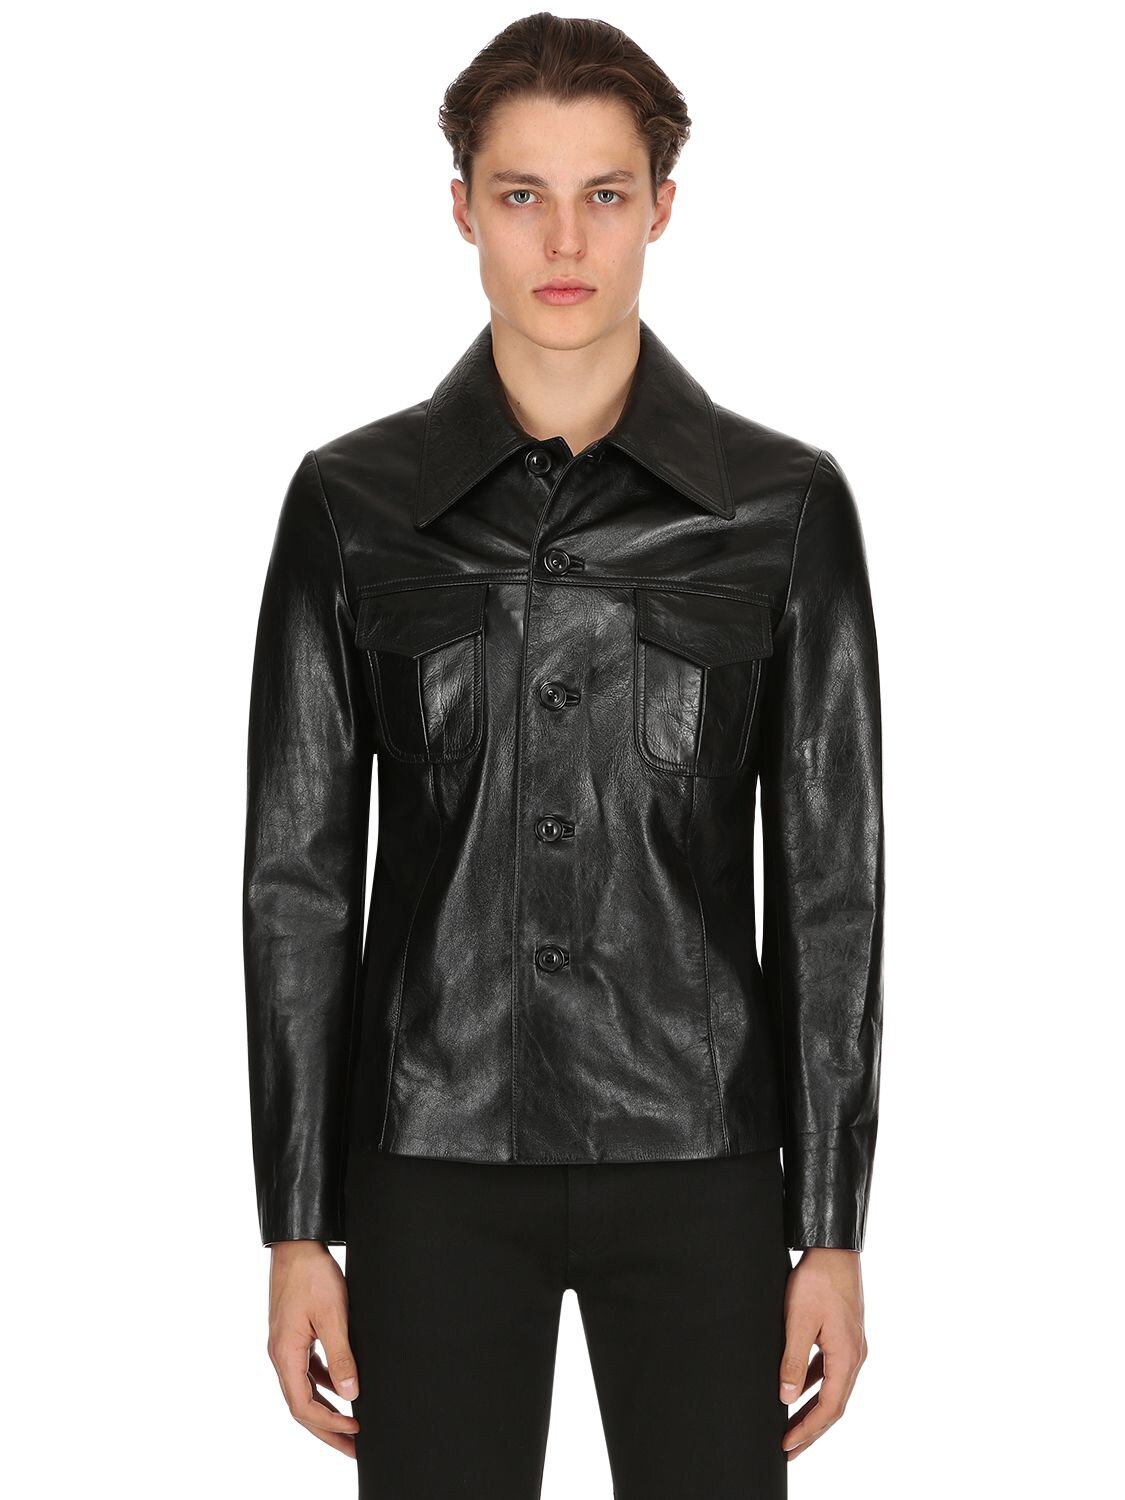 Maison Margiela Replica 70s Style Leather Jacket In Black | ModeSens